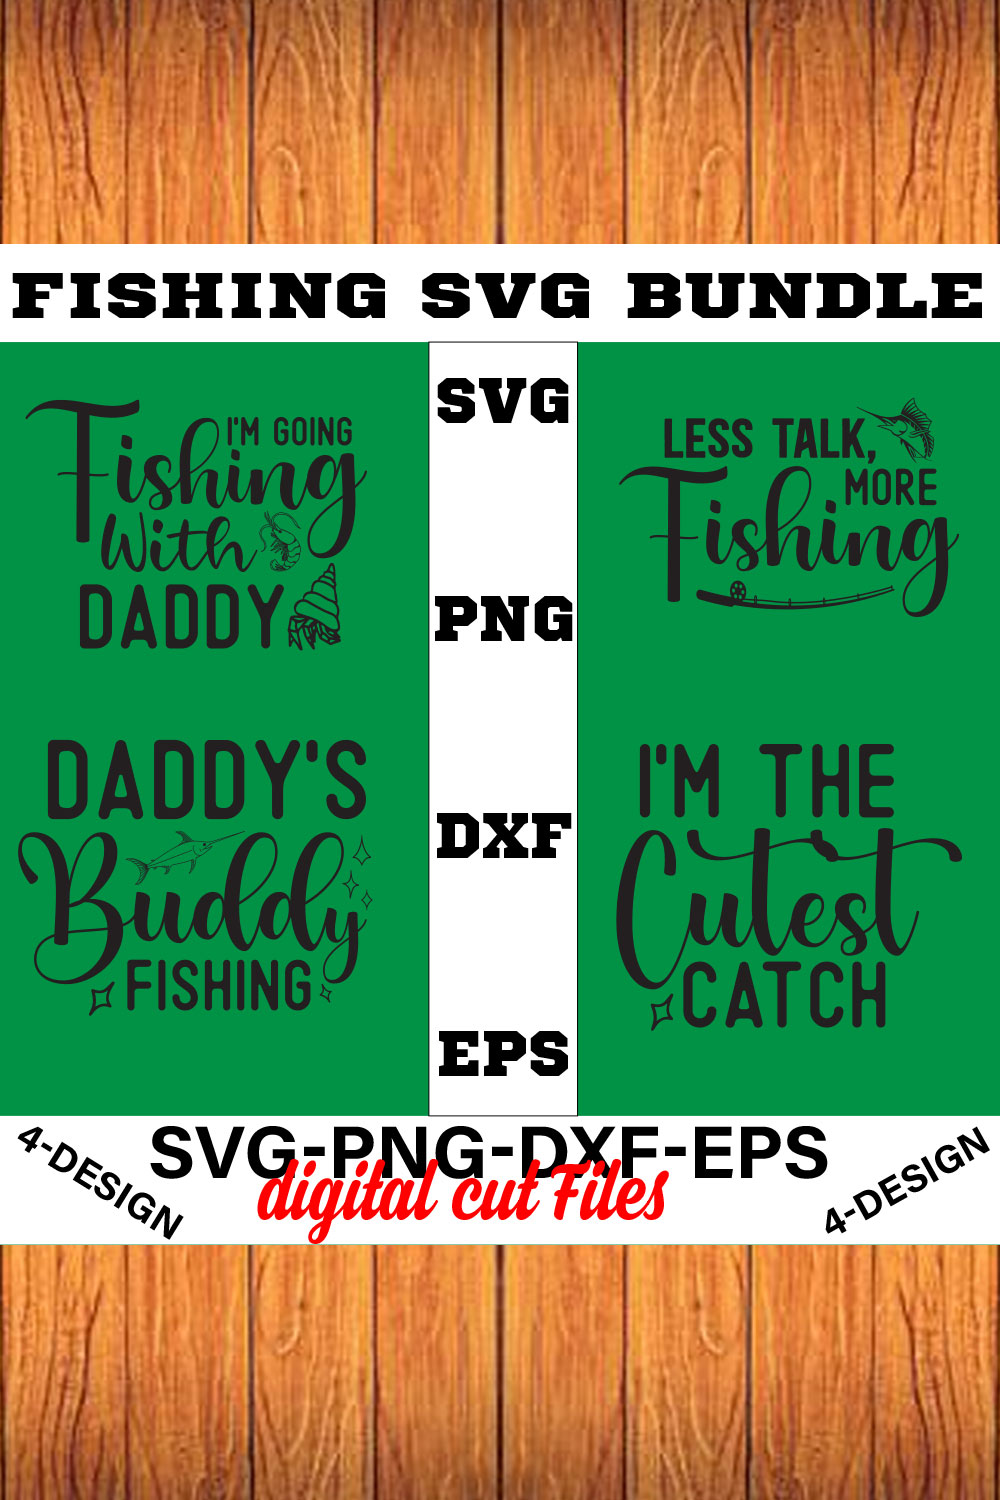 Fishing Design Bundle PNG ONLY, SVG bundle, Fishing svg, Fishing life Volume-03 pinterest preview image.